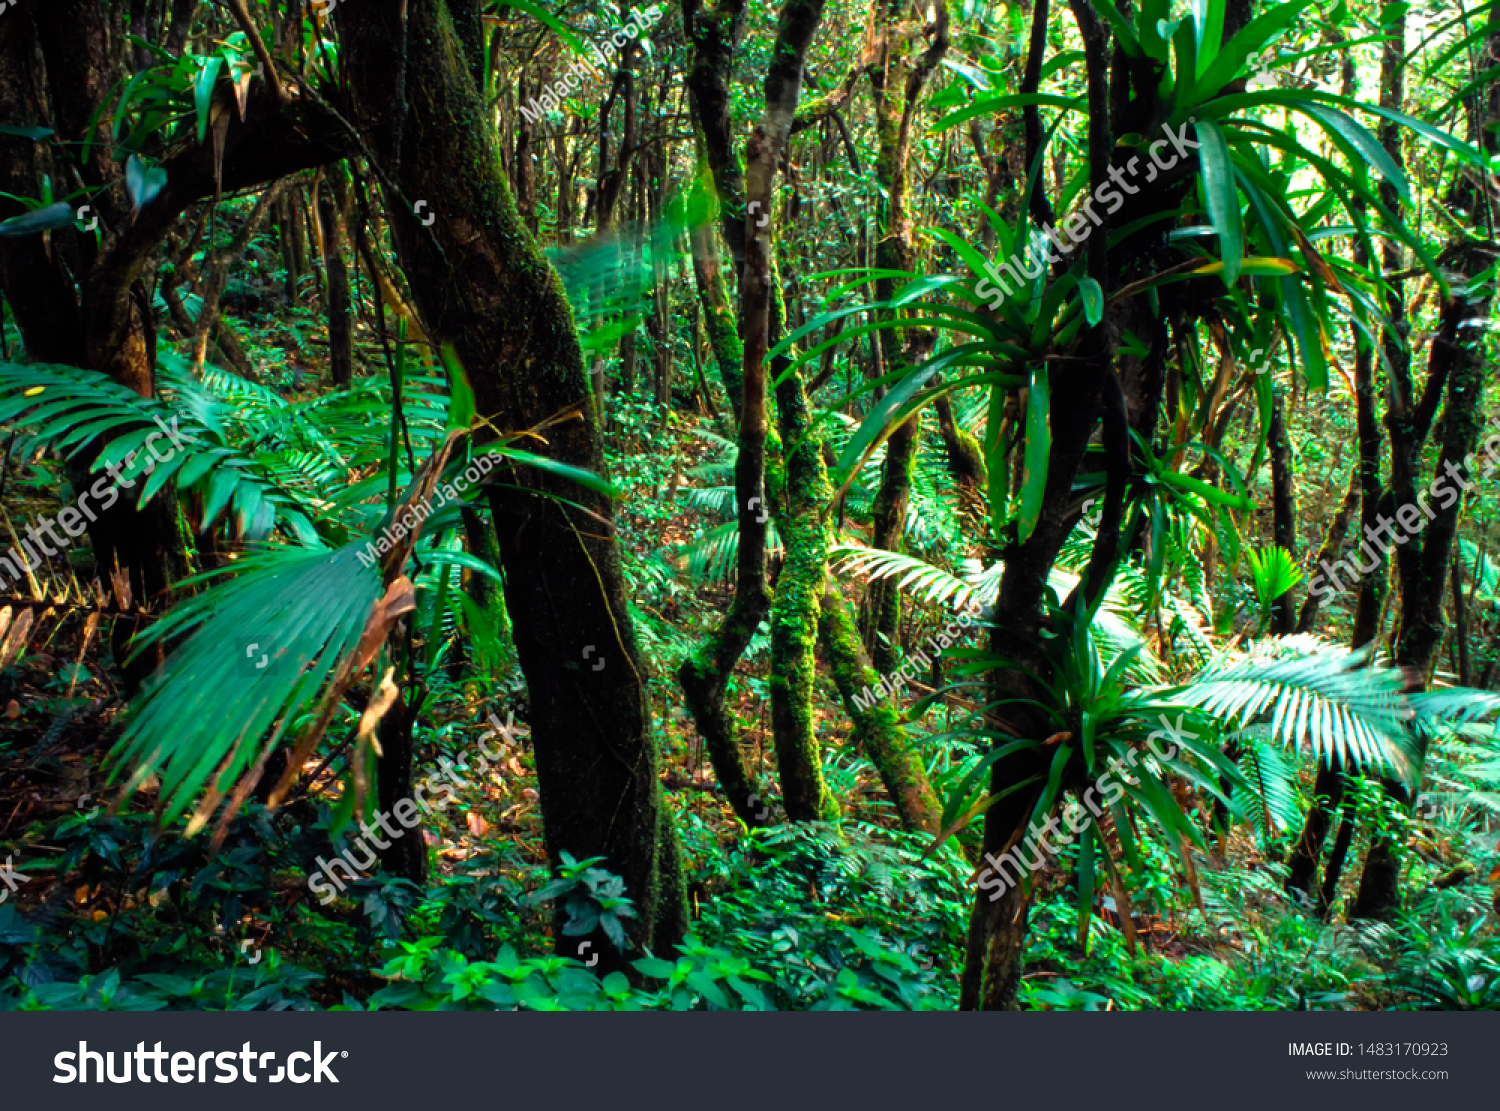 Puerto Rico, El Yunque National Forest, lush vegetation #1483170923